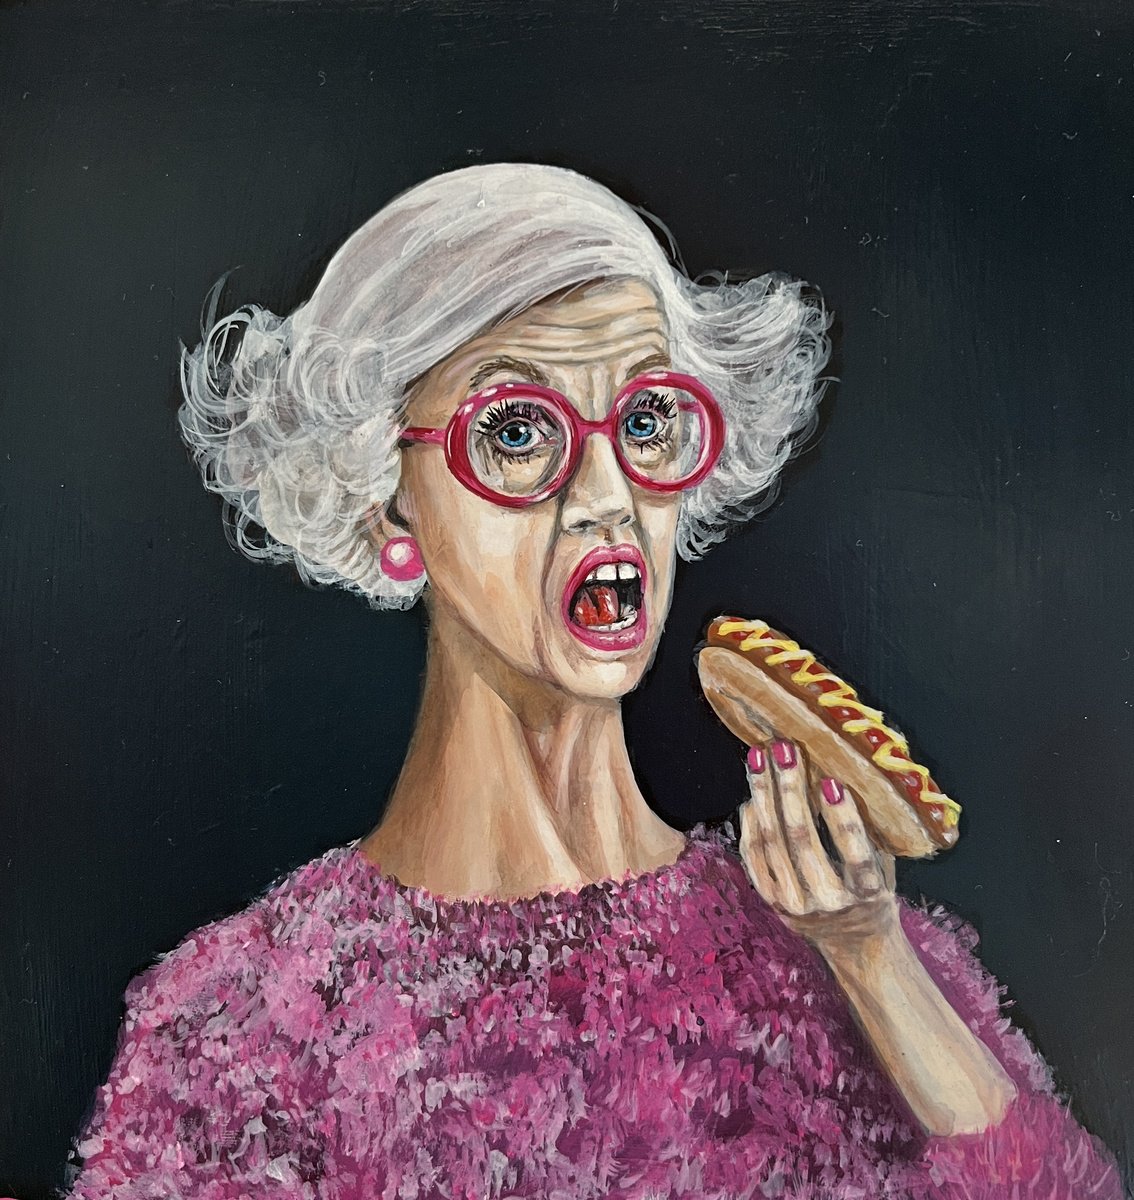 A classy Lady eating a hotdog called 